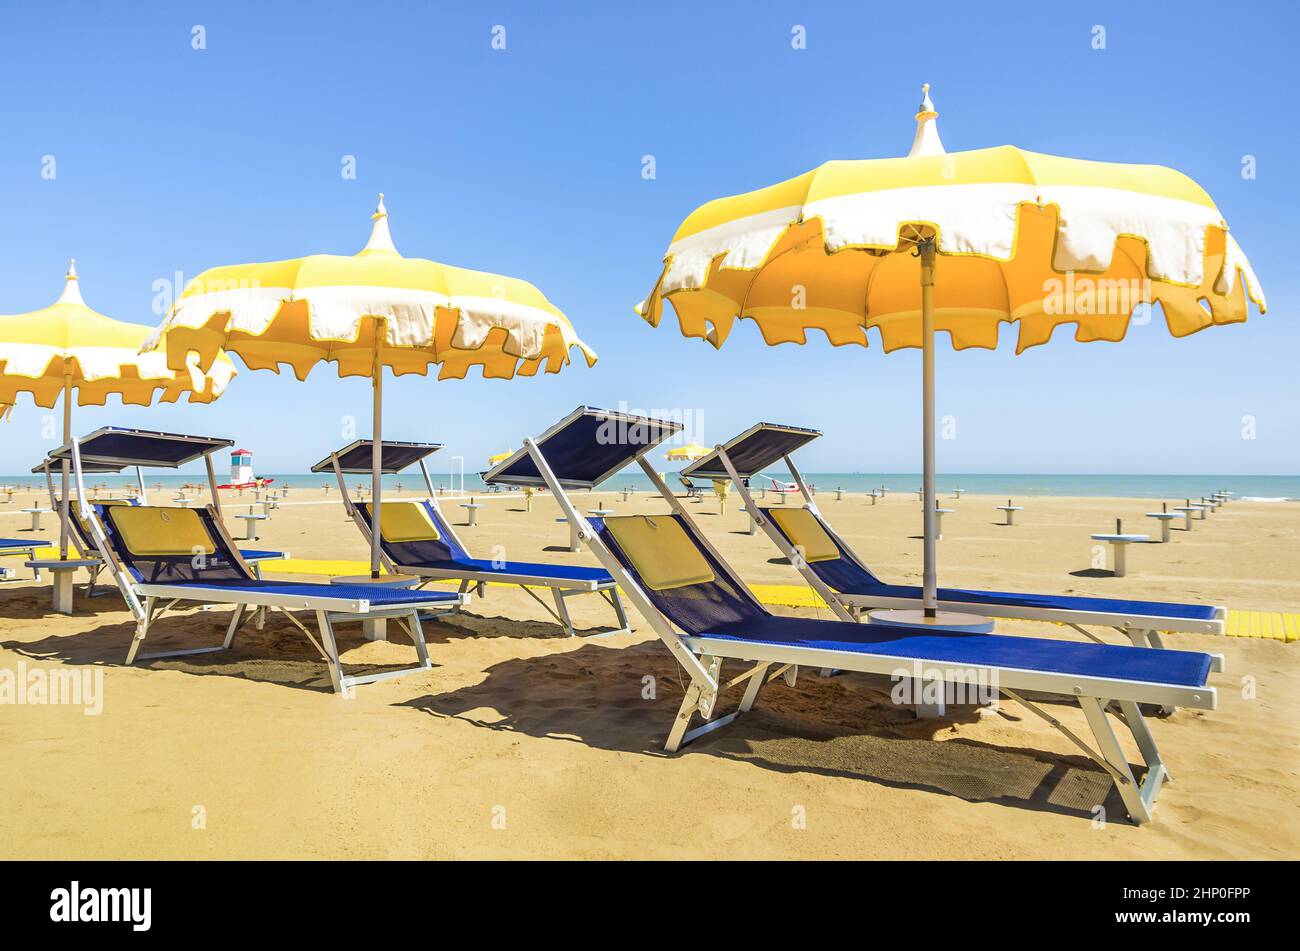 Rimini Beach Immagini e Fotos Stock - Alamy